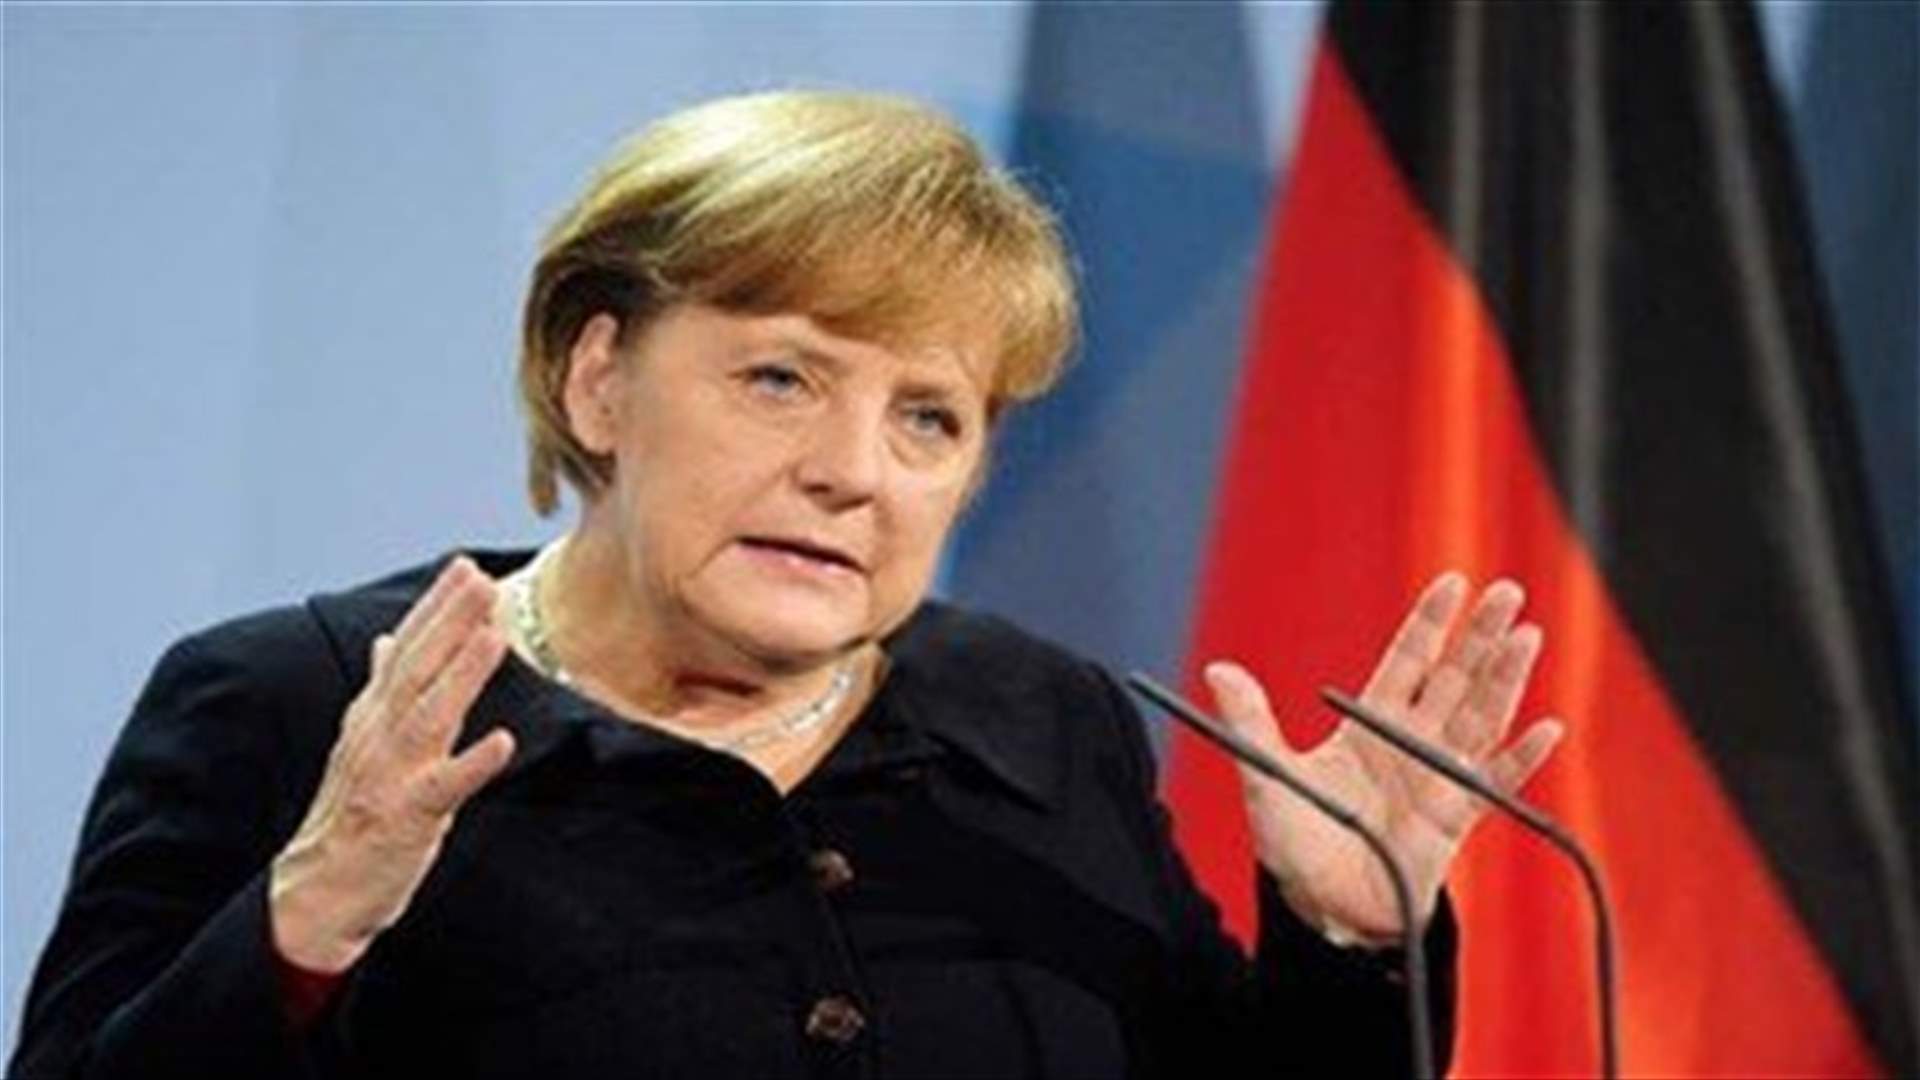 Merkel: Killing of civilians in Syria is a massacre